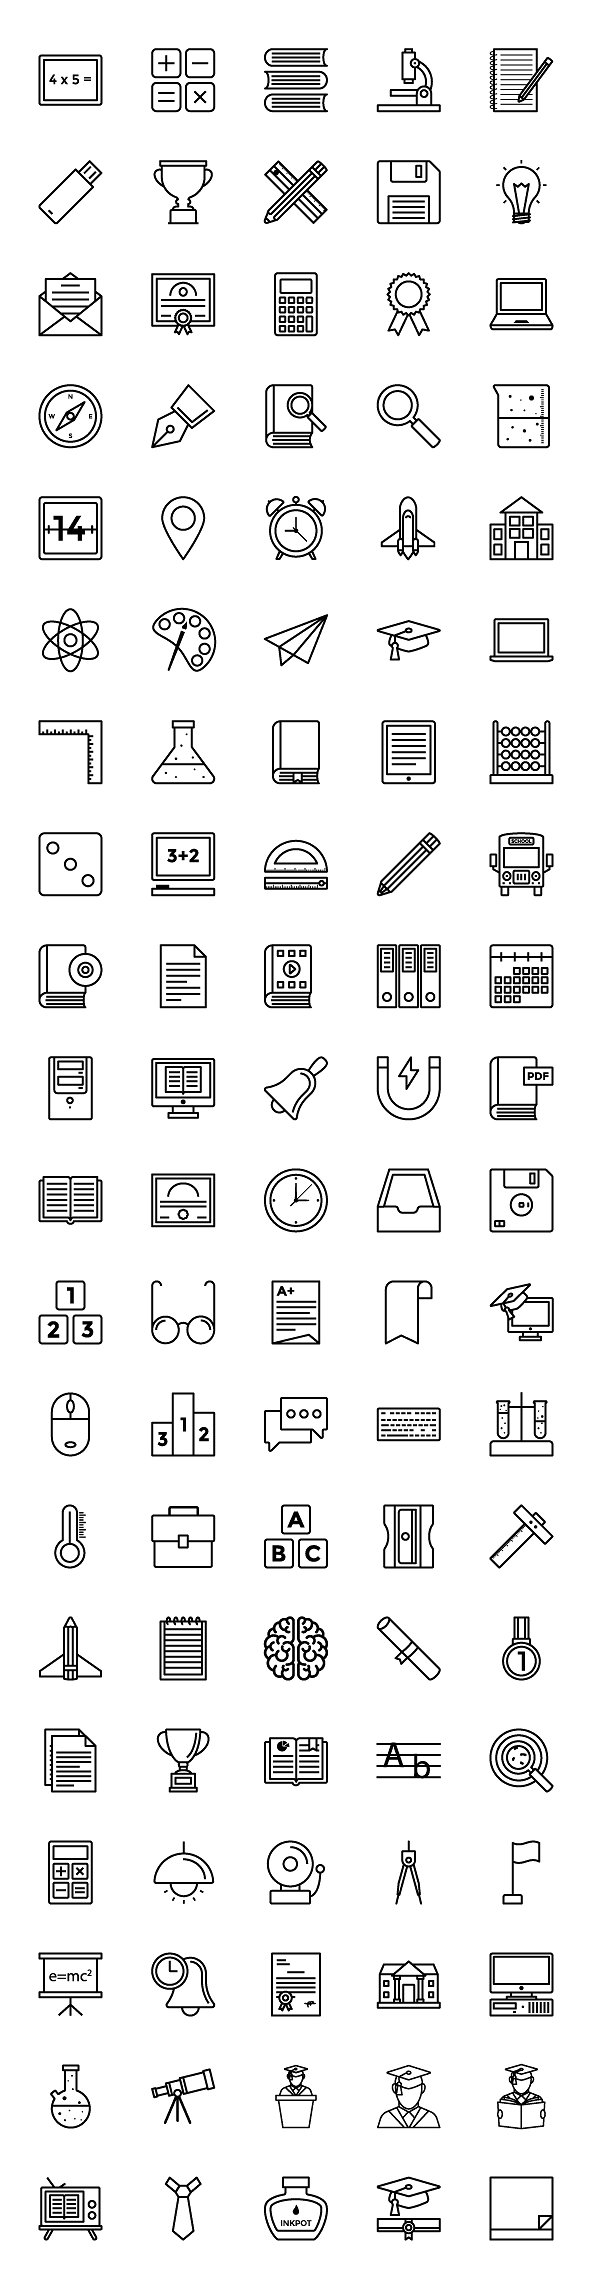 1200枚教育主题图标 Educational 1200 Icons Bundle Pack插图(11)